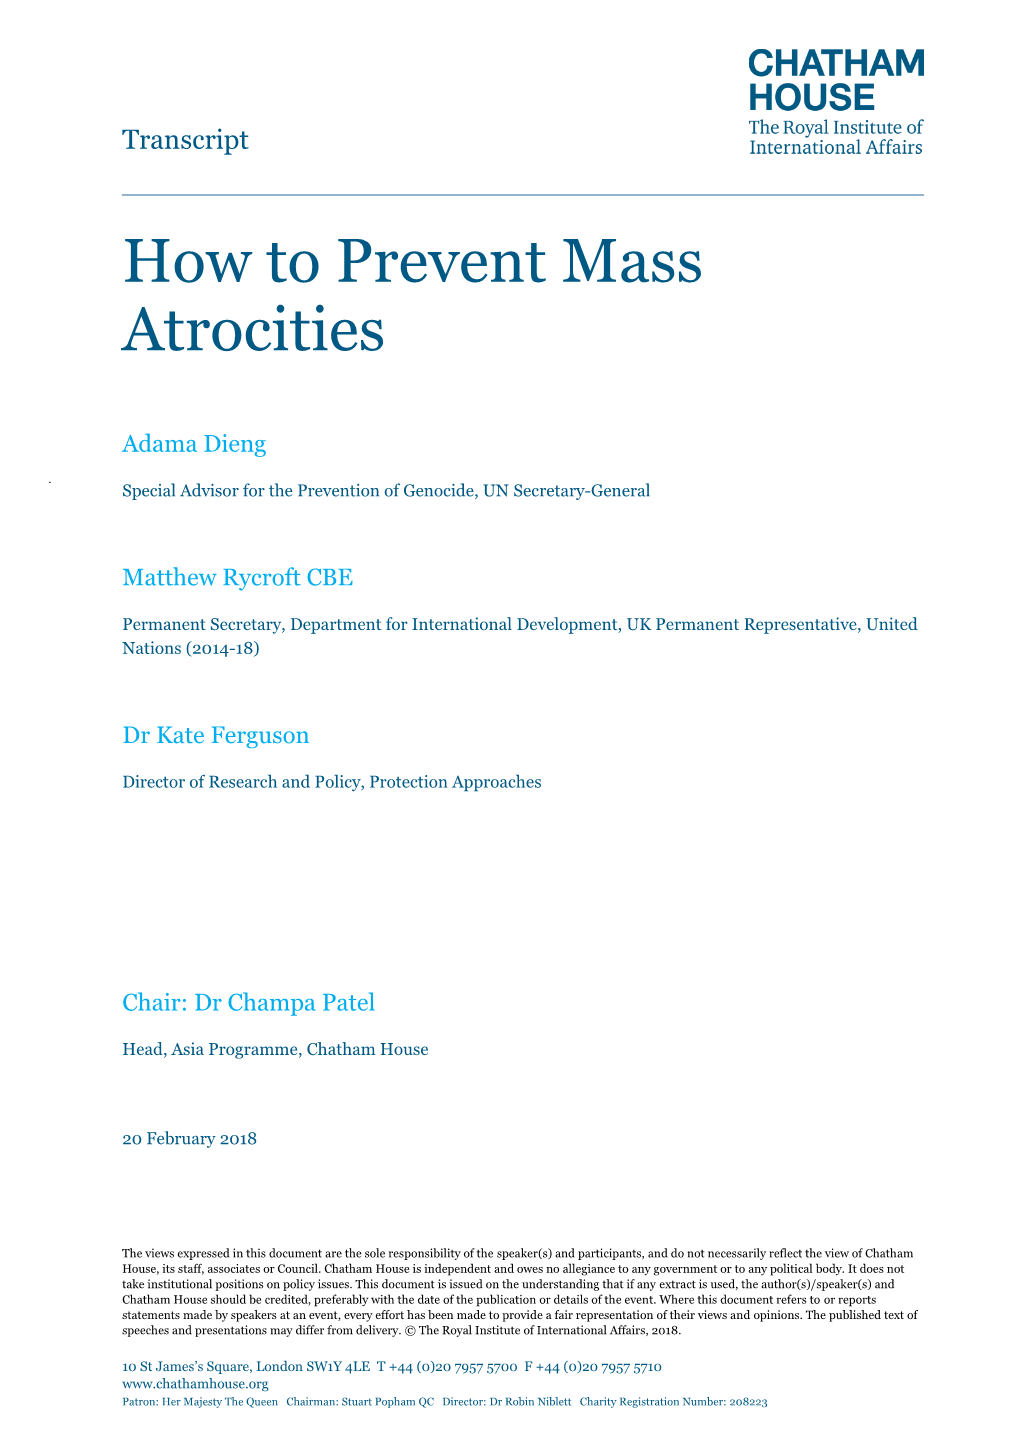 How to Prevent Mass Atrocities